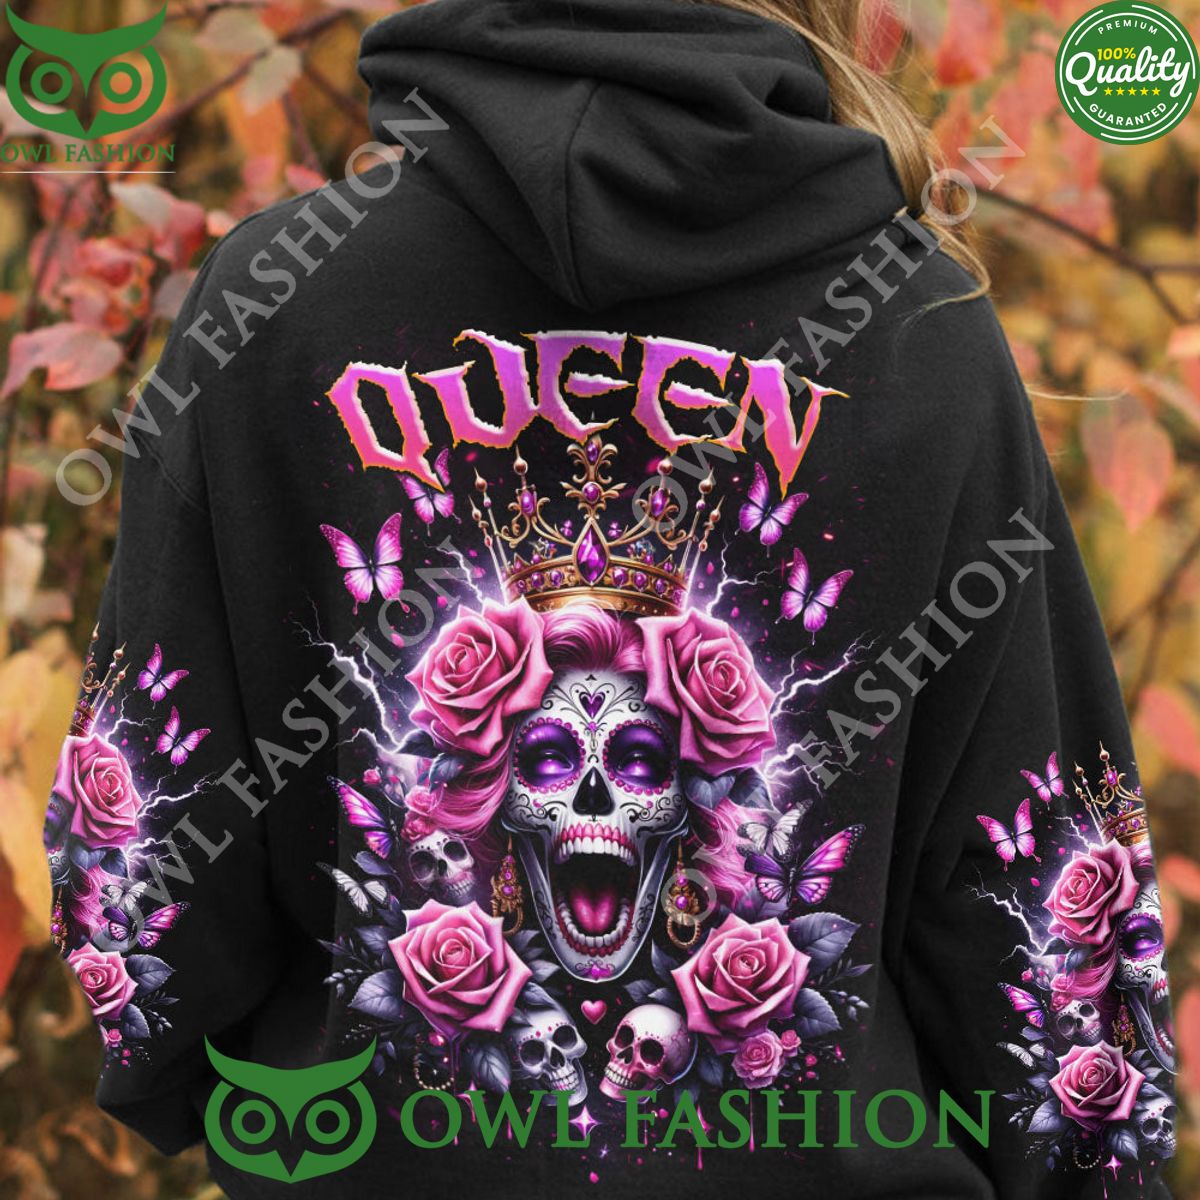 King Queen Skull Rose Couple Aop Hoodie Shirt Hey! You look amazing dear